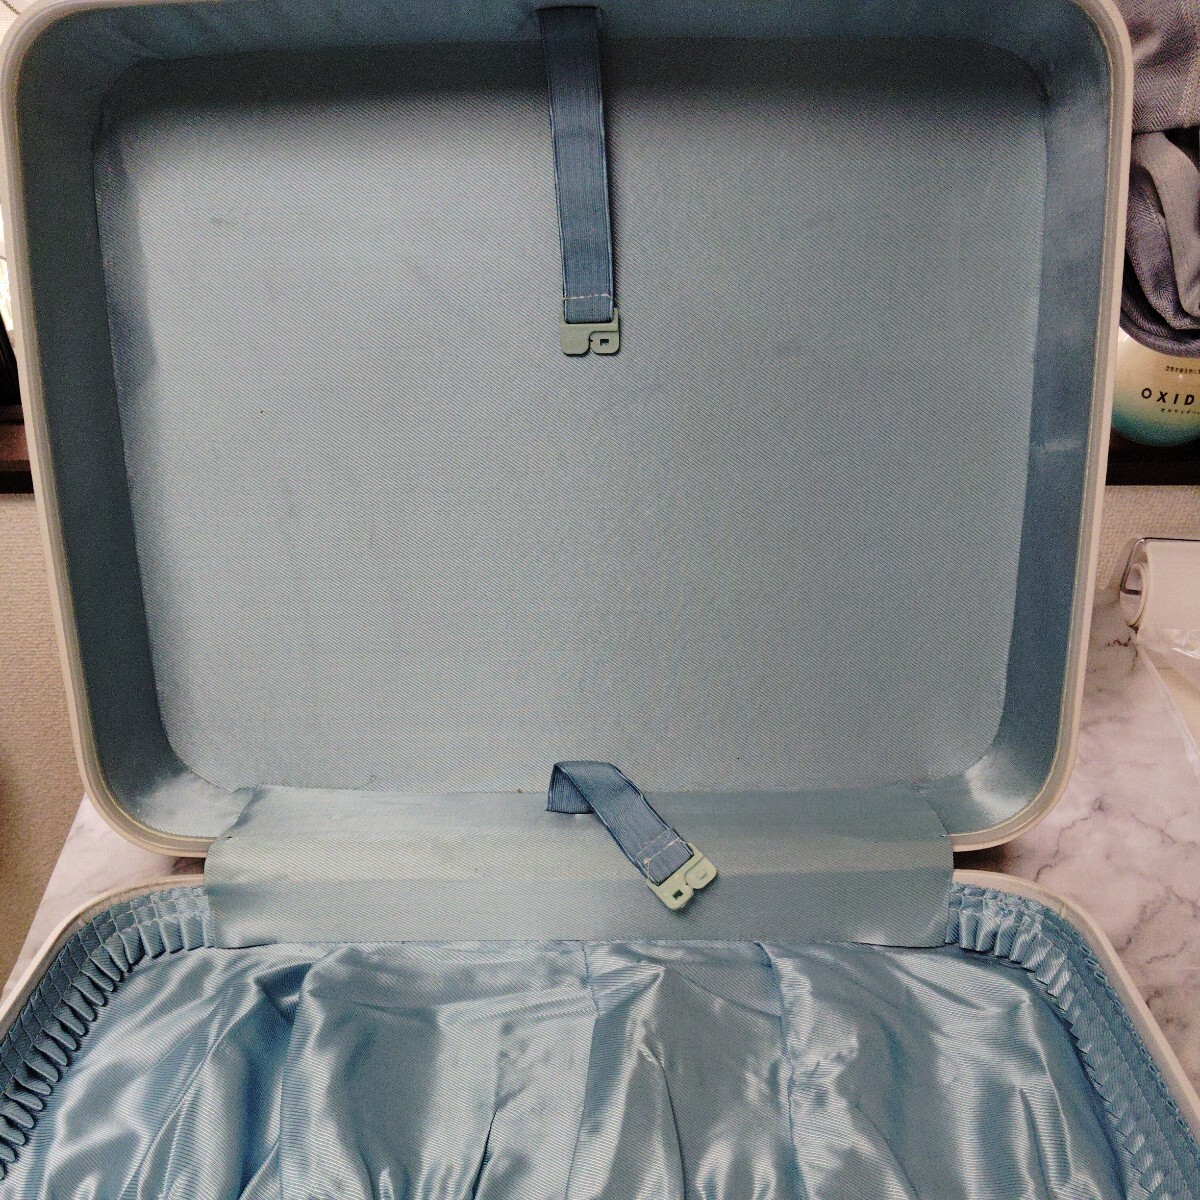  attache case retro suitcase 